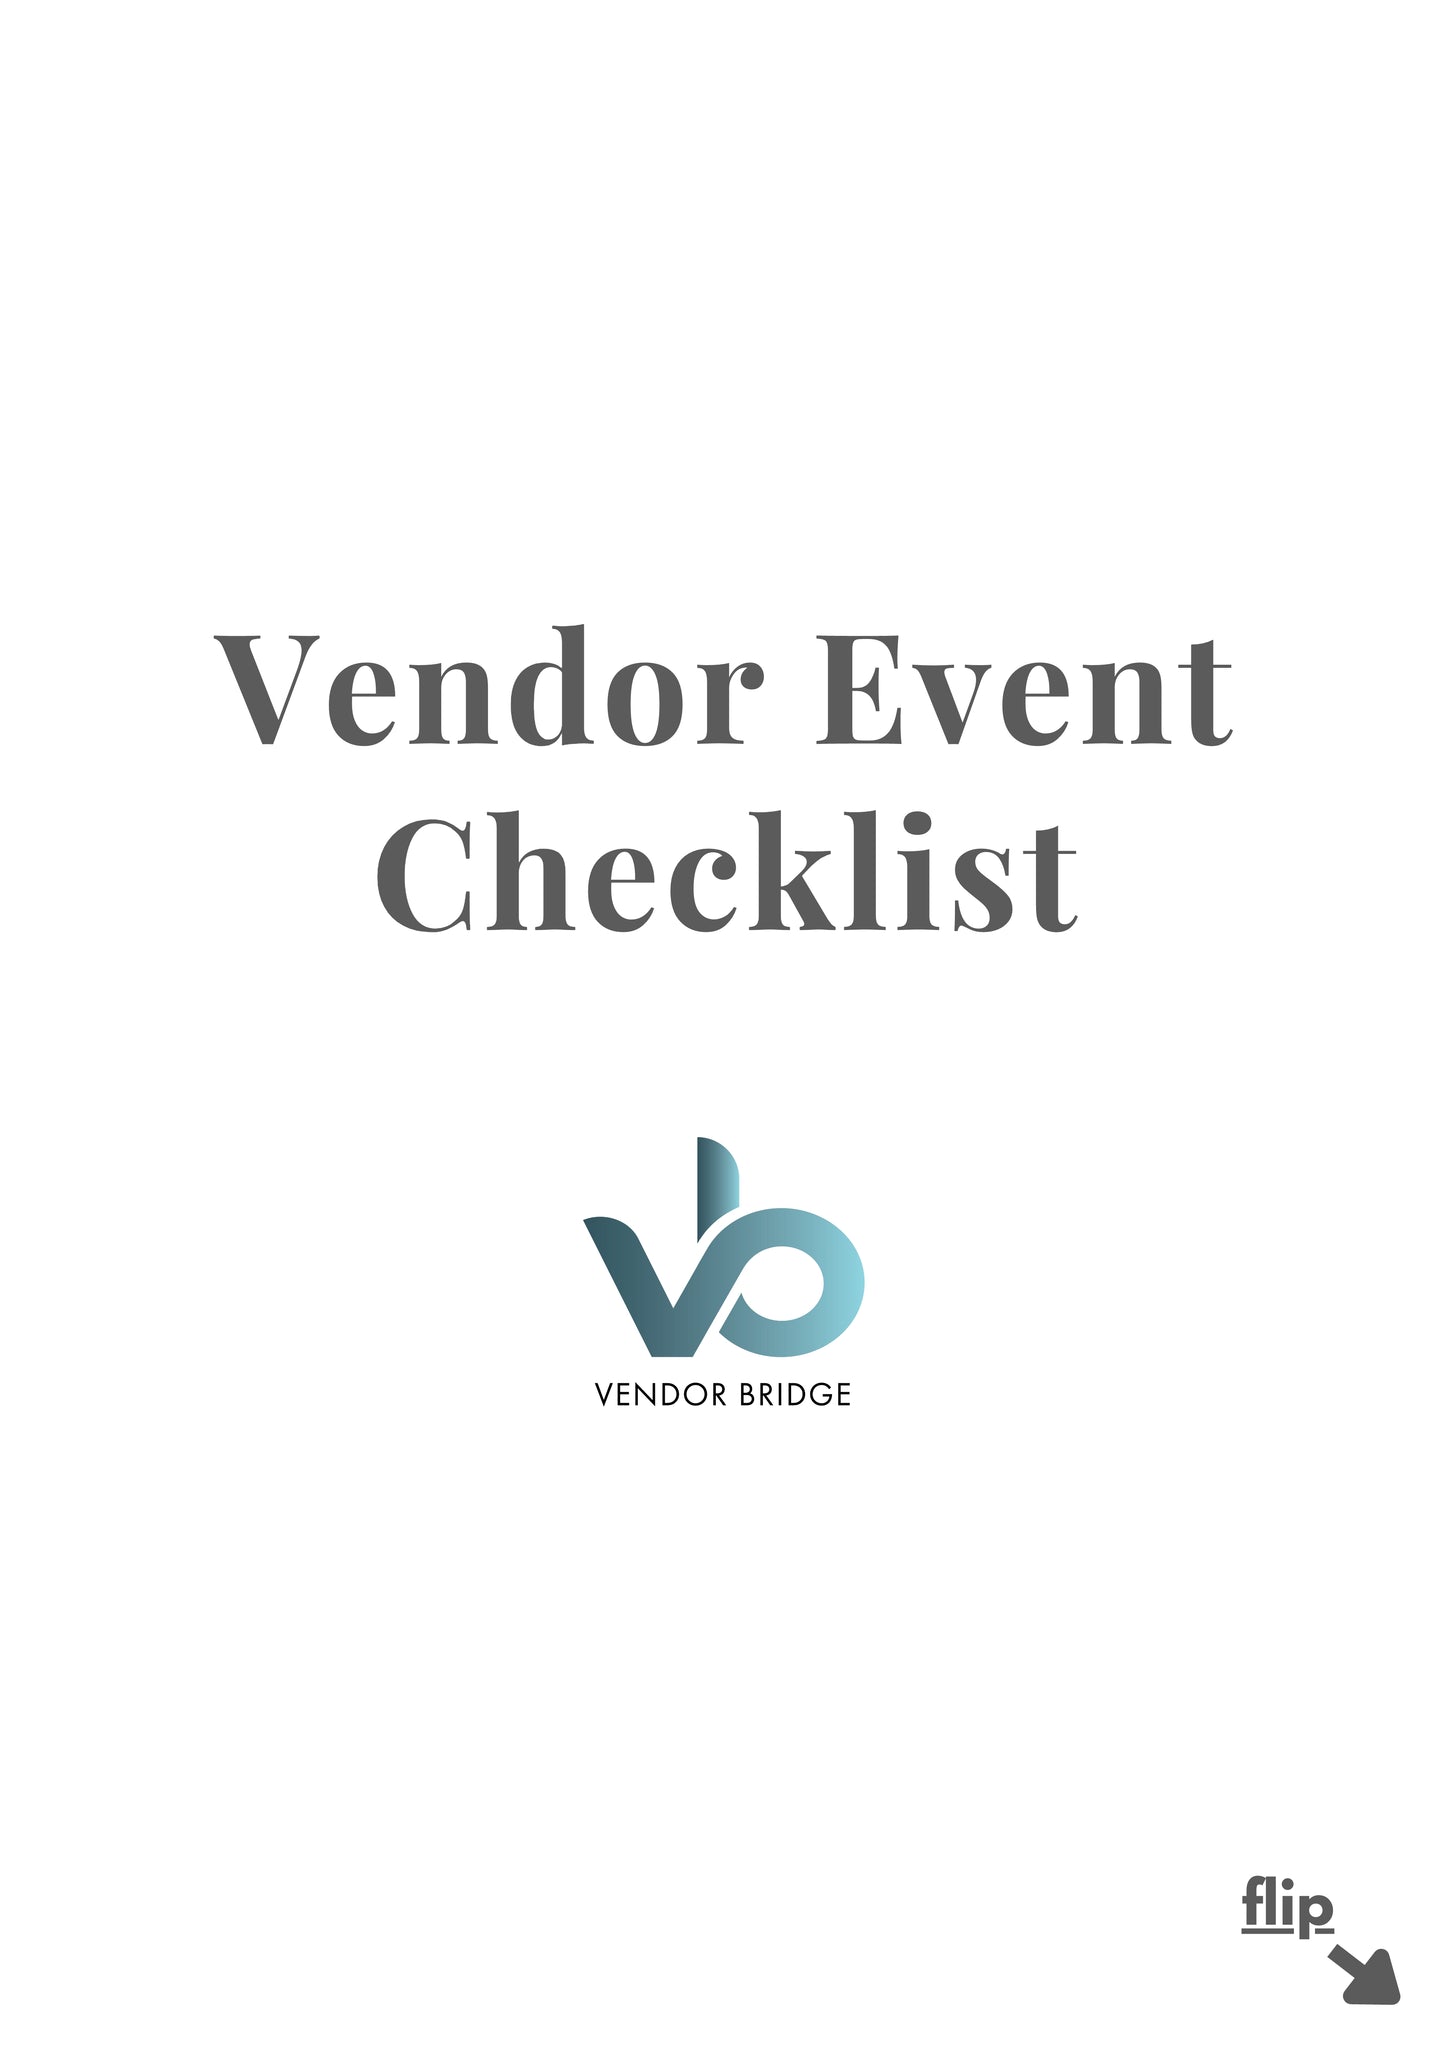 Vendor Event Booth Checklist